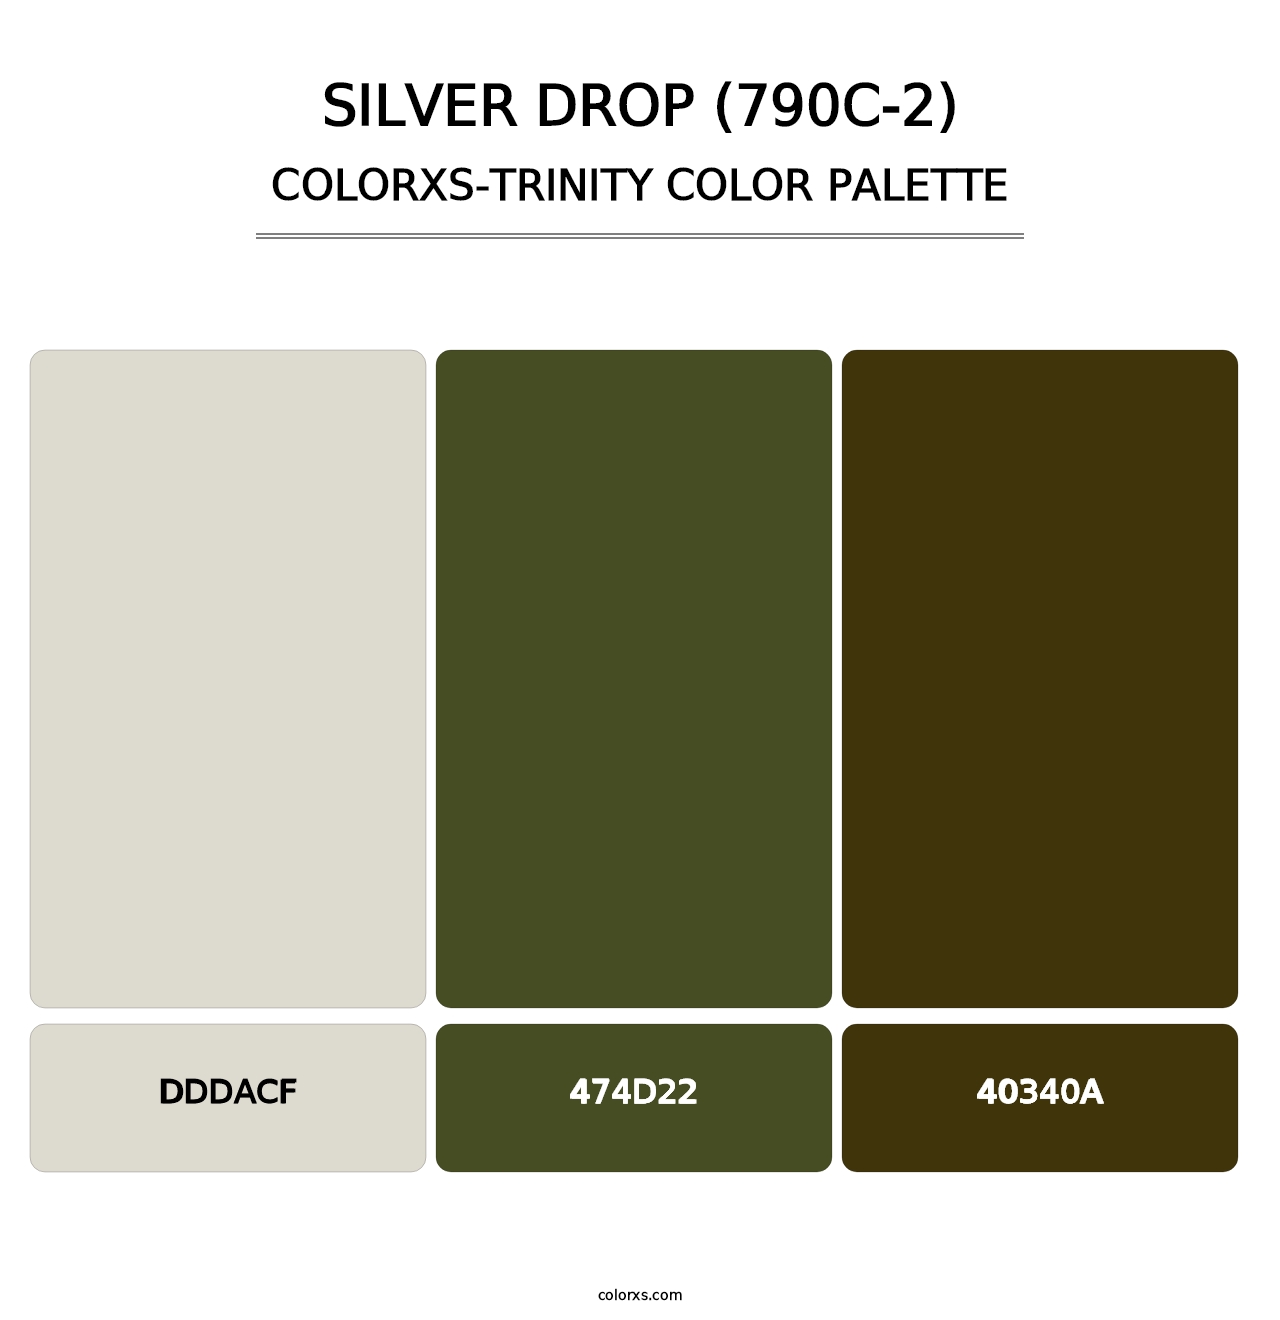 Silver Drop (790C-2) - Colorxs Trinity Palette